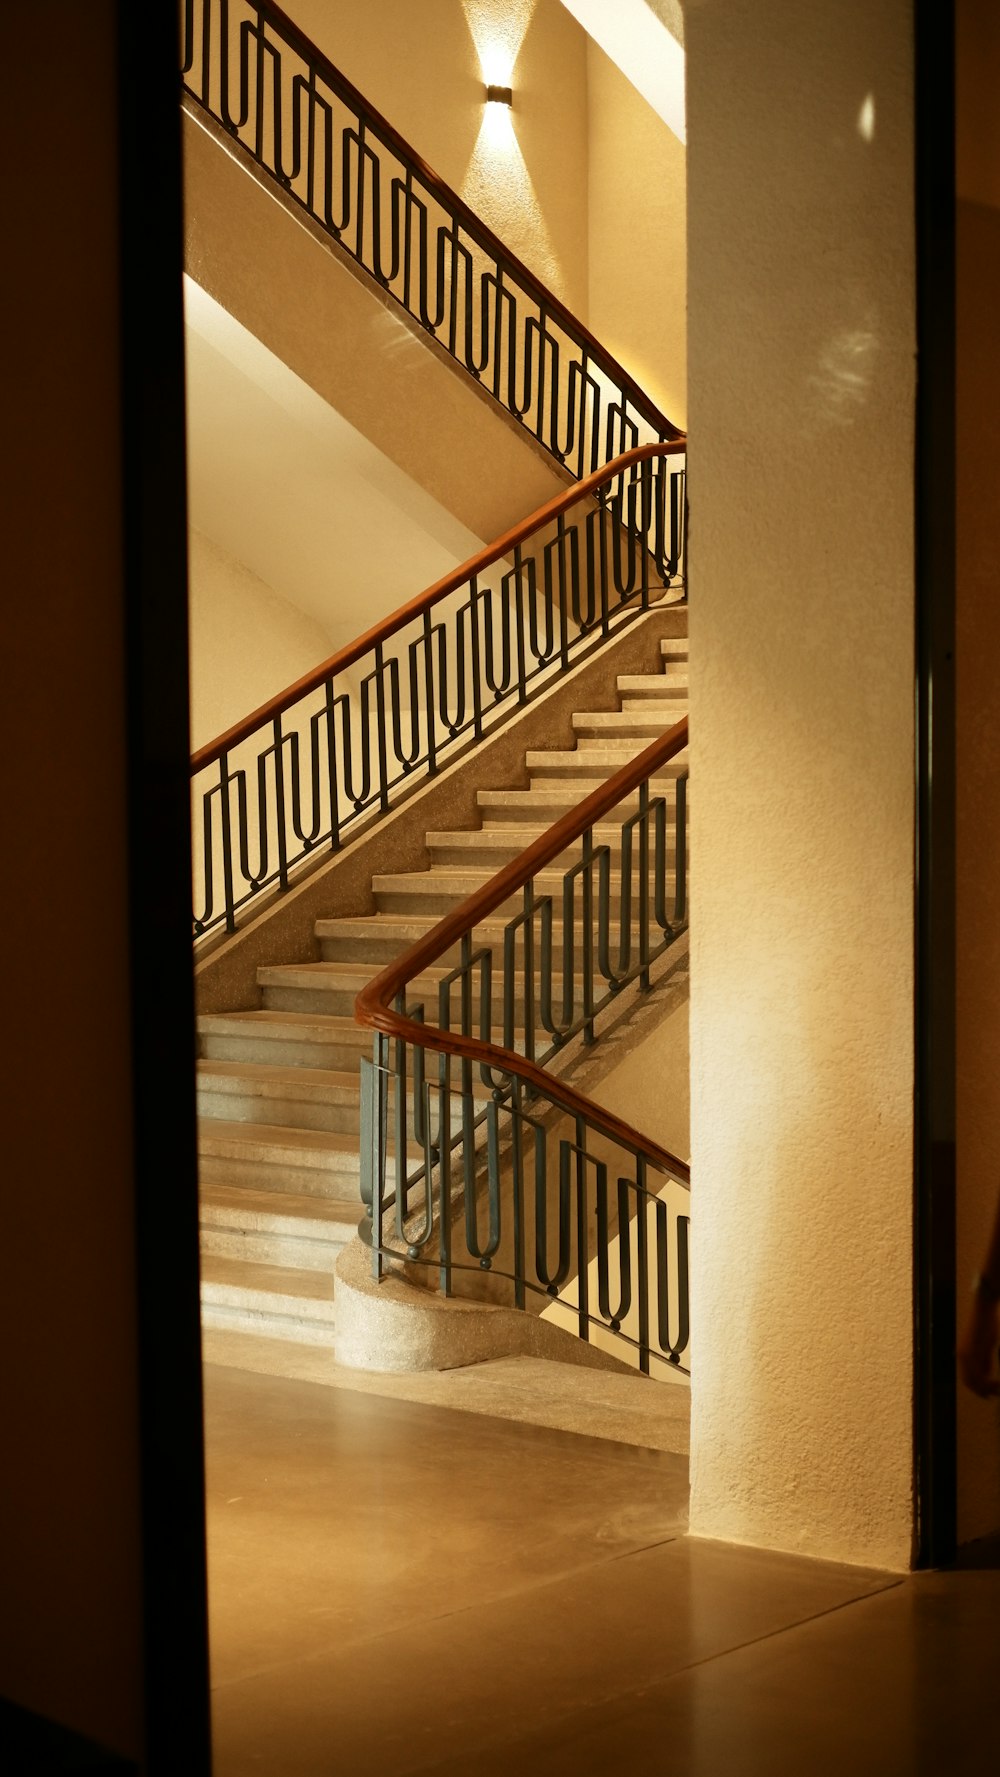 a view of a staircase through a glass door